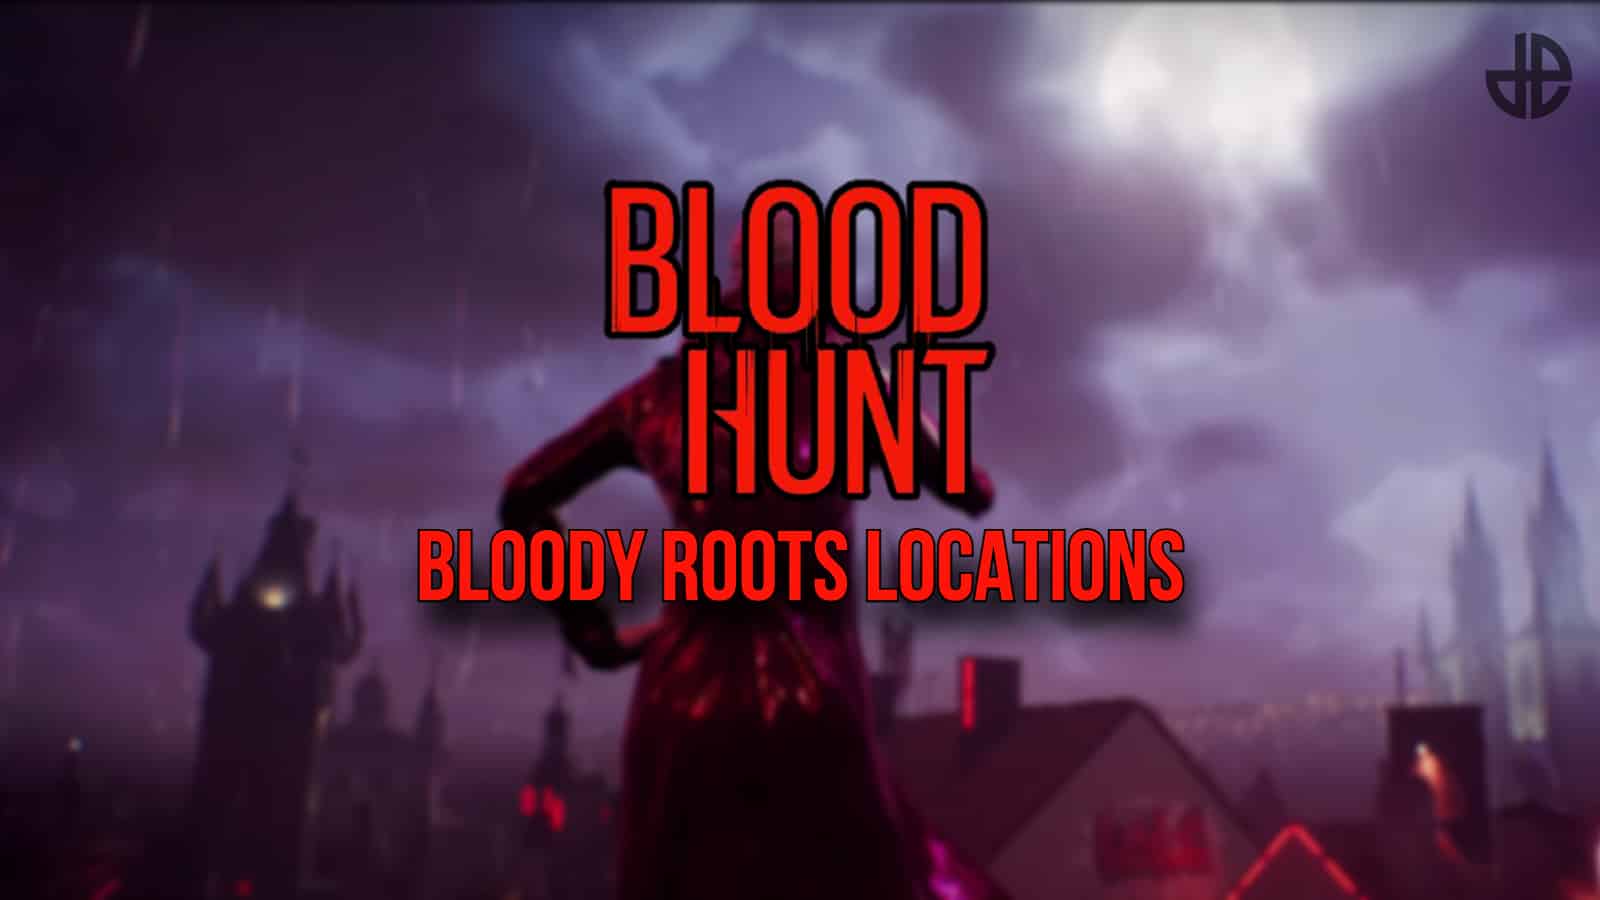 Vampire the Masquerade: Bloodhunt - Toreador Clan Gameplay Trailer